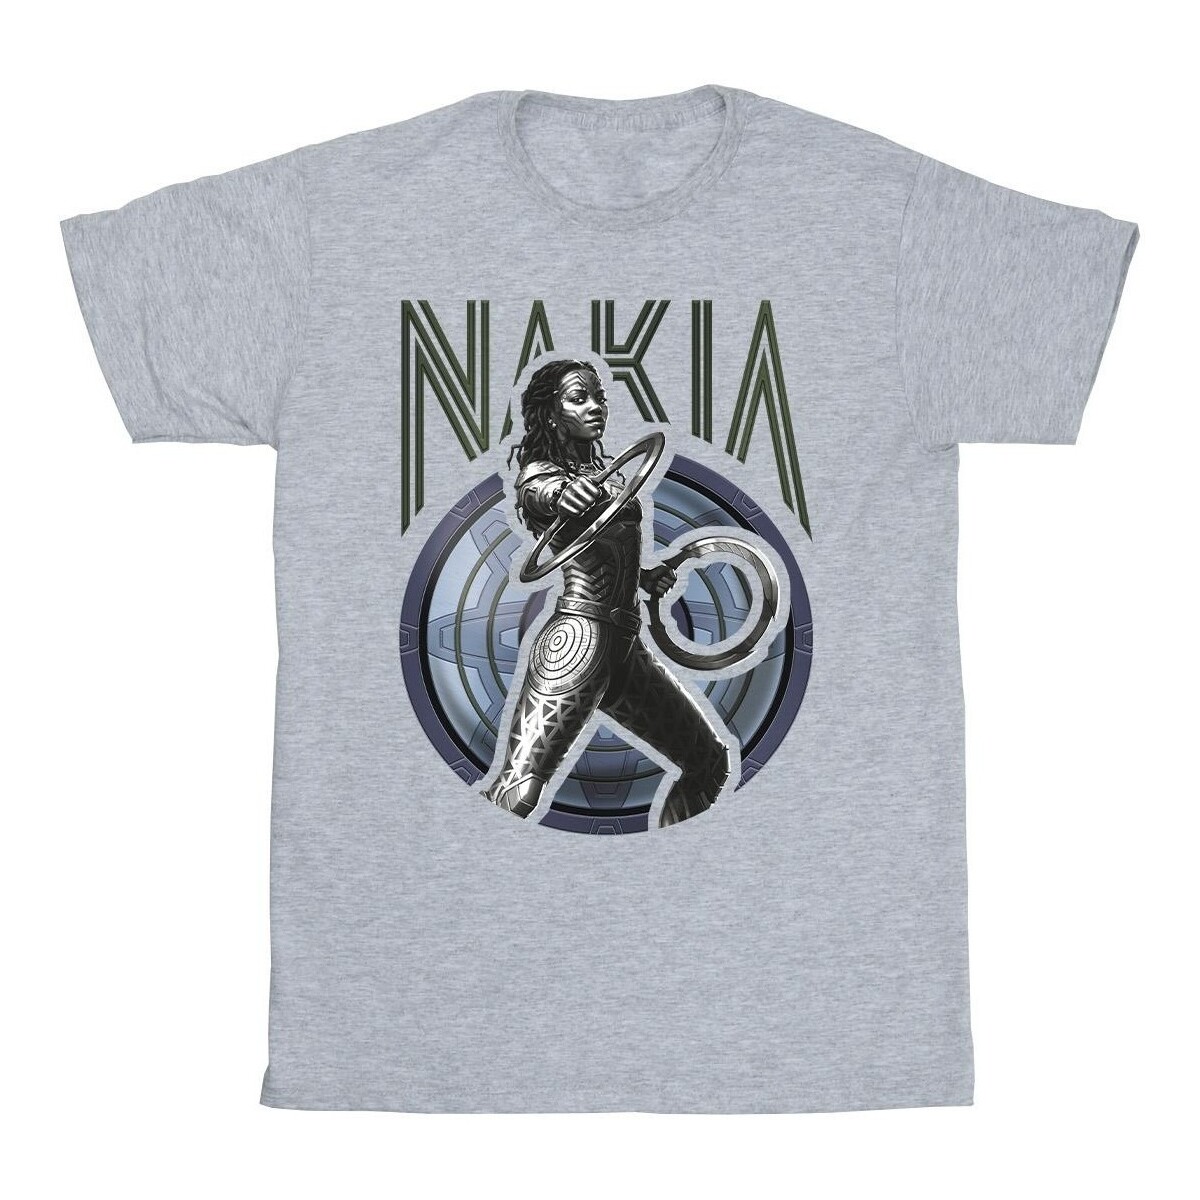 Vêtements Garçon T-shirts manches courtes Marvel Wakanda Forever Nakia Shield Gris